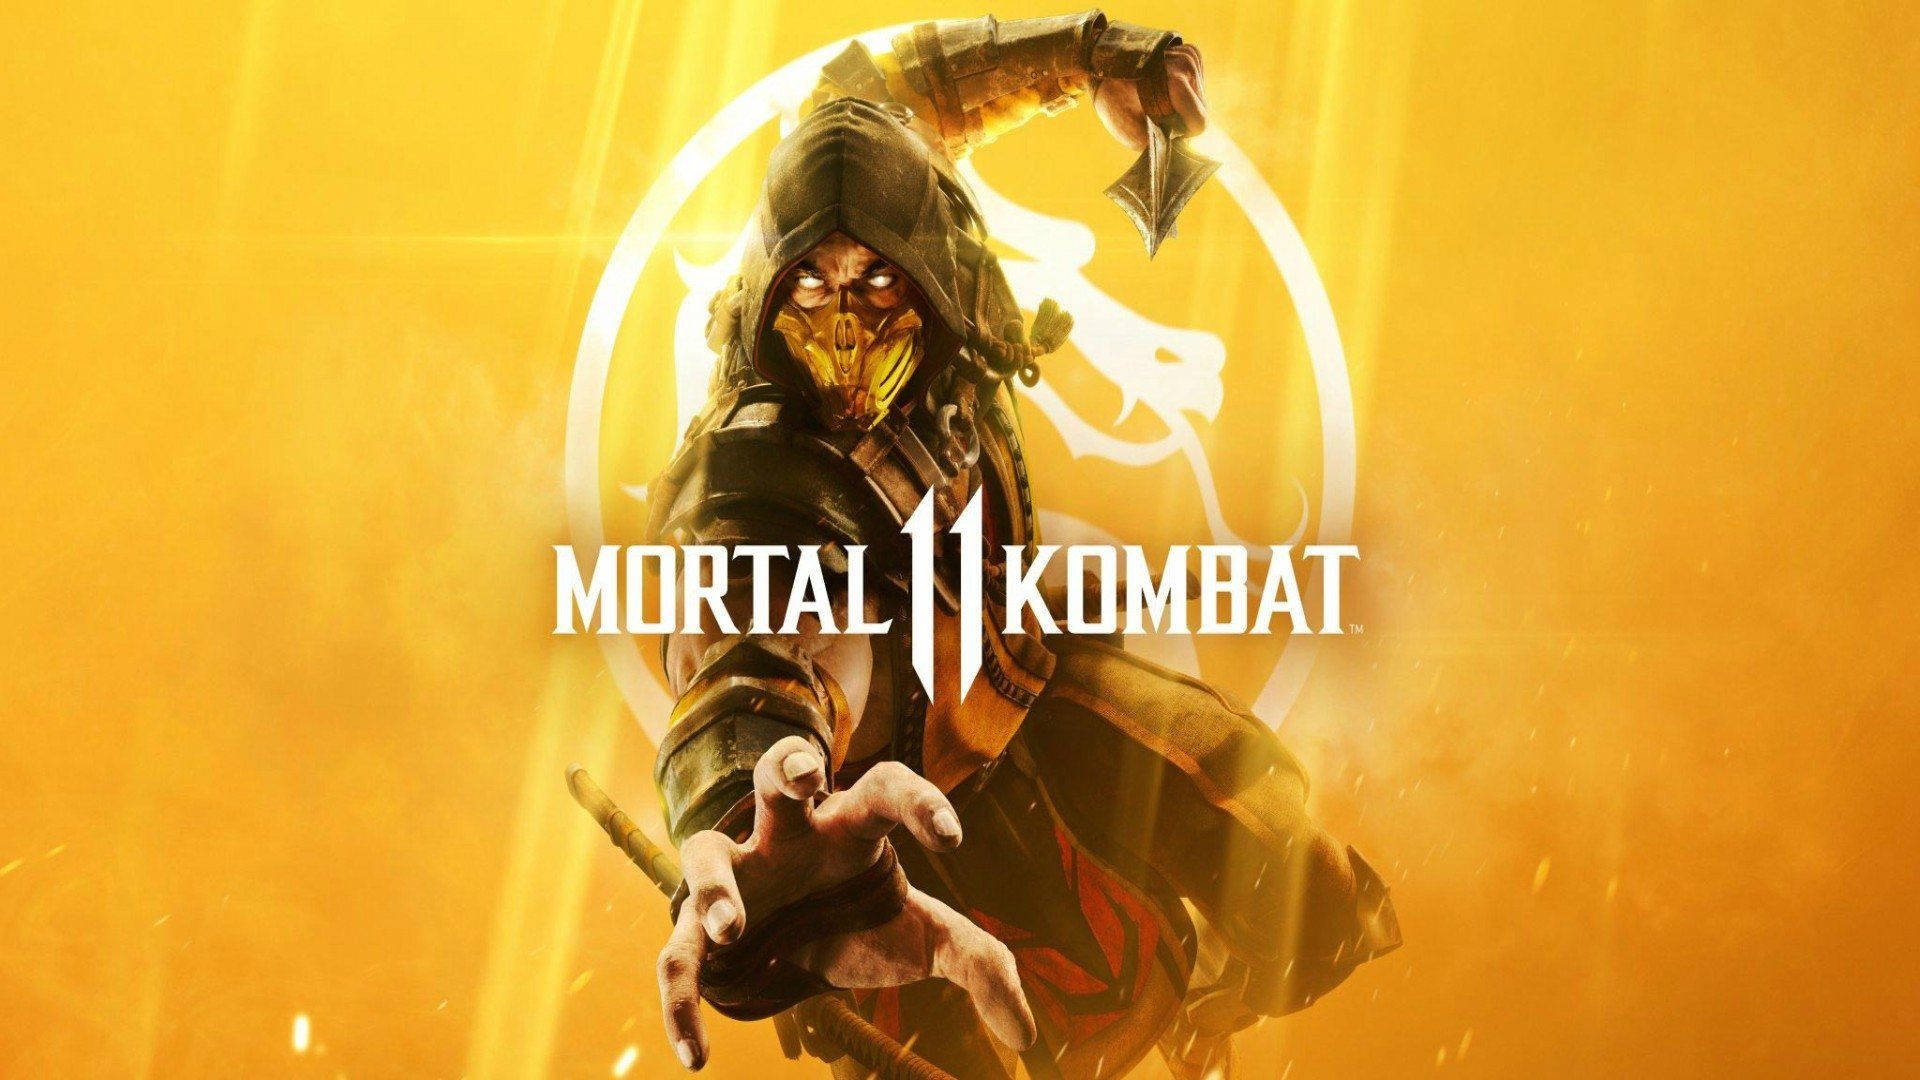 Scorpion from Mortal Kombat 11 returns for more action. Wallpaper